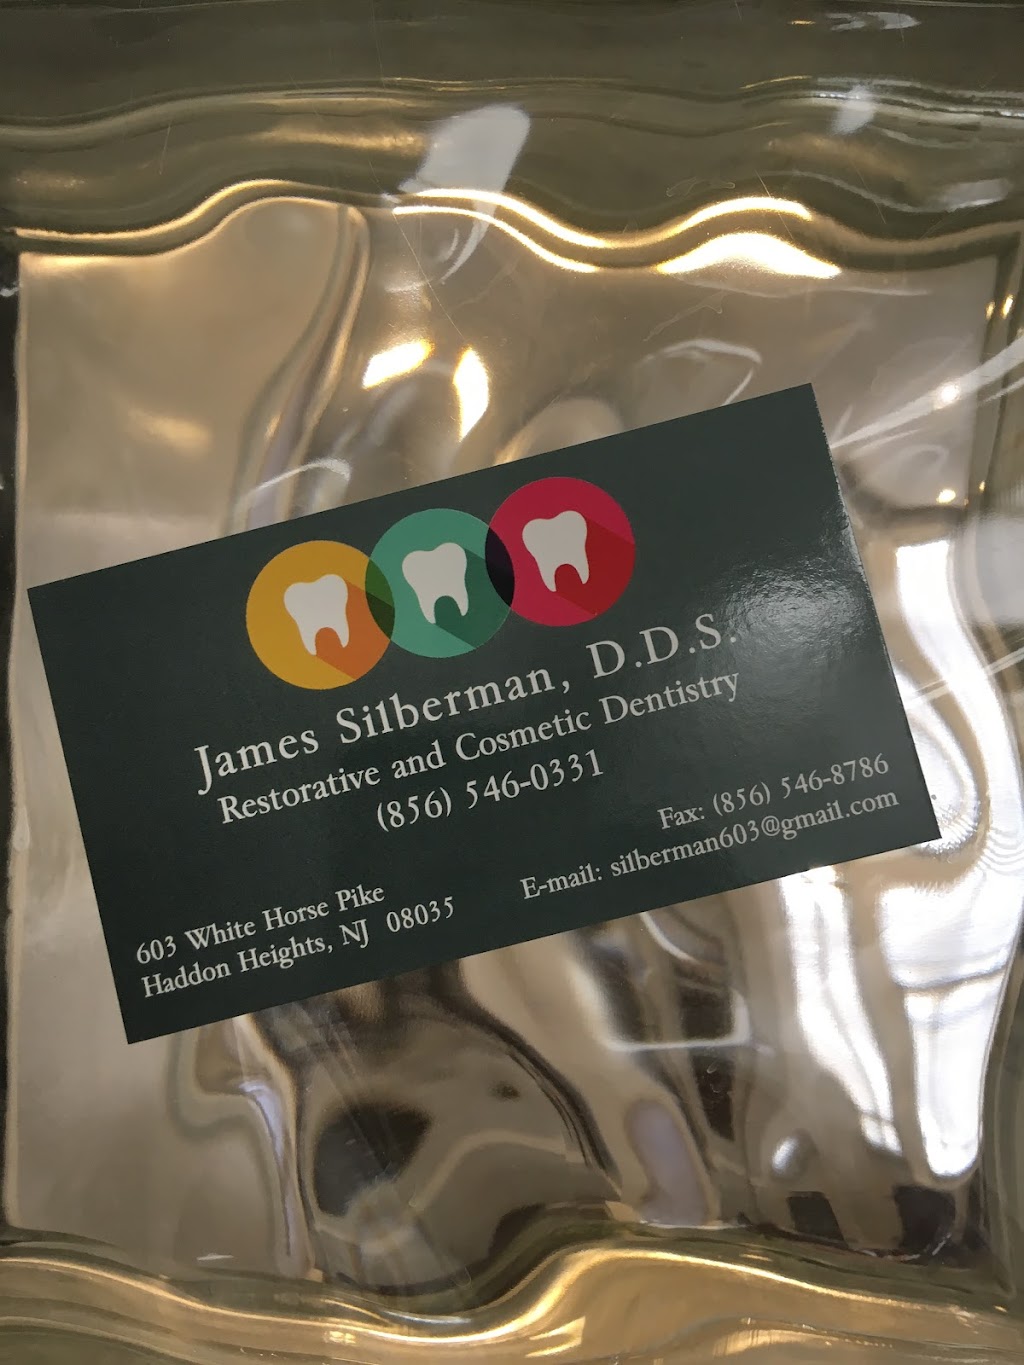 James Silberman, D.D.S. | 603 White Horse Pike, Haddon Heights, NJ 08035 | Phone: (856) 546-0331